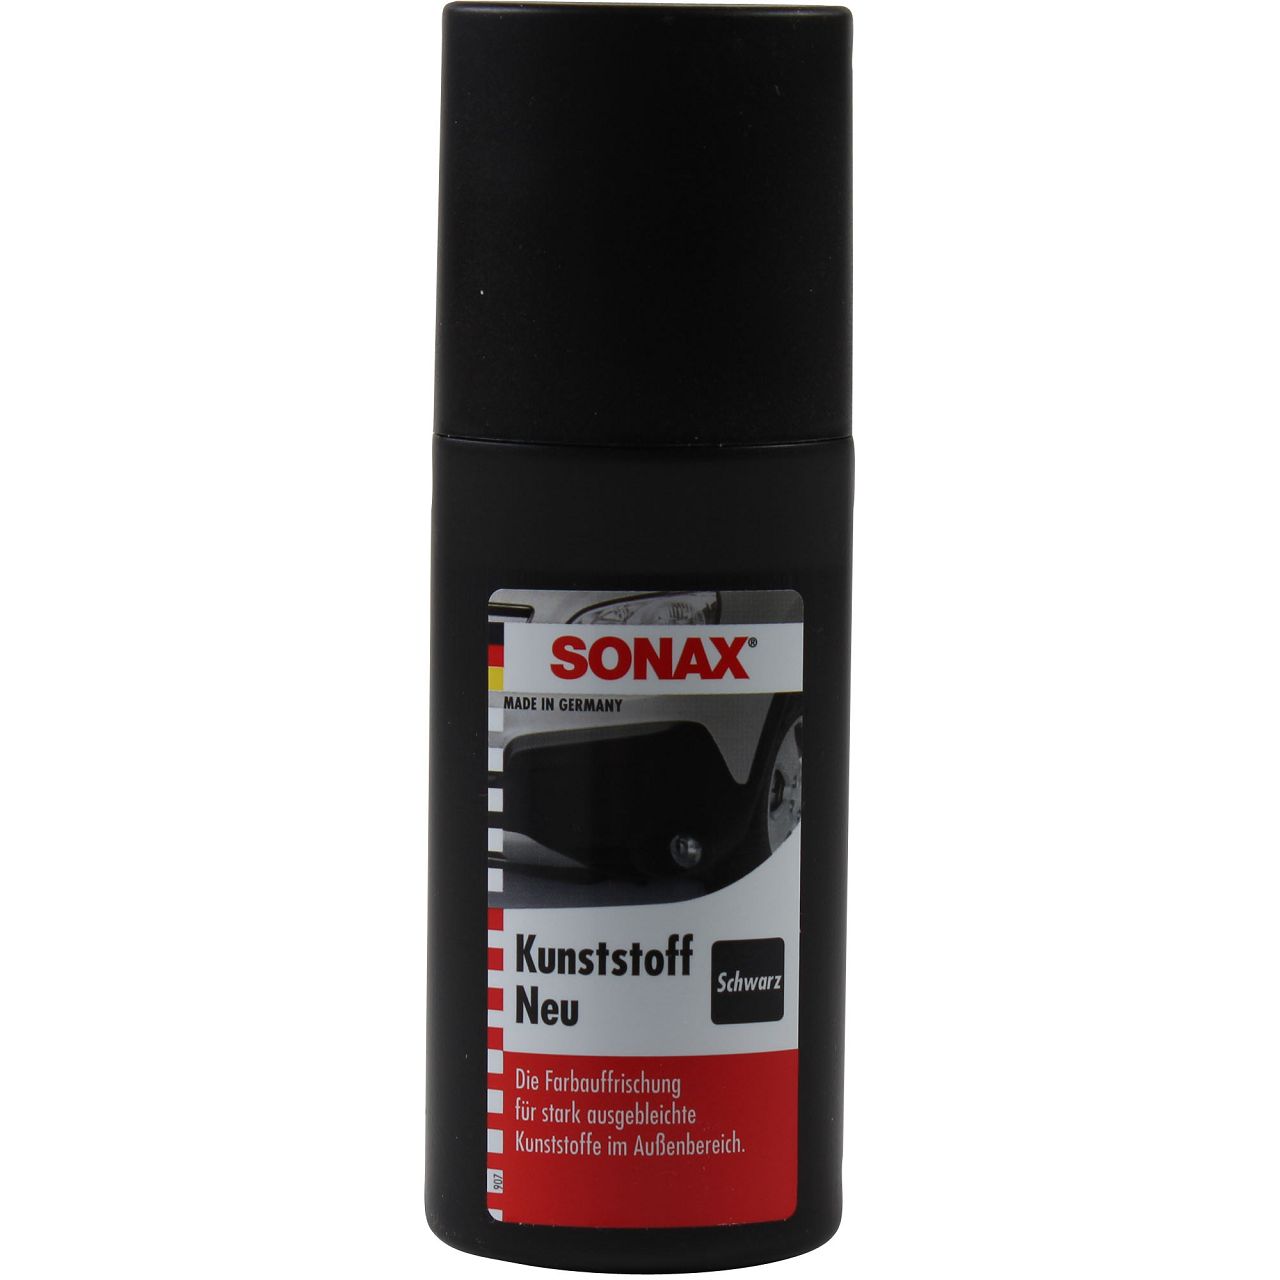 SONAX 409100 KunststoffNeu Schwarz Kunststoff-Neu KunststoffPflege100ml